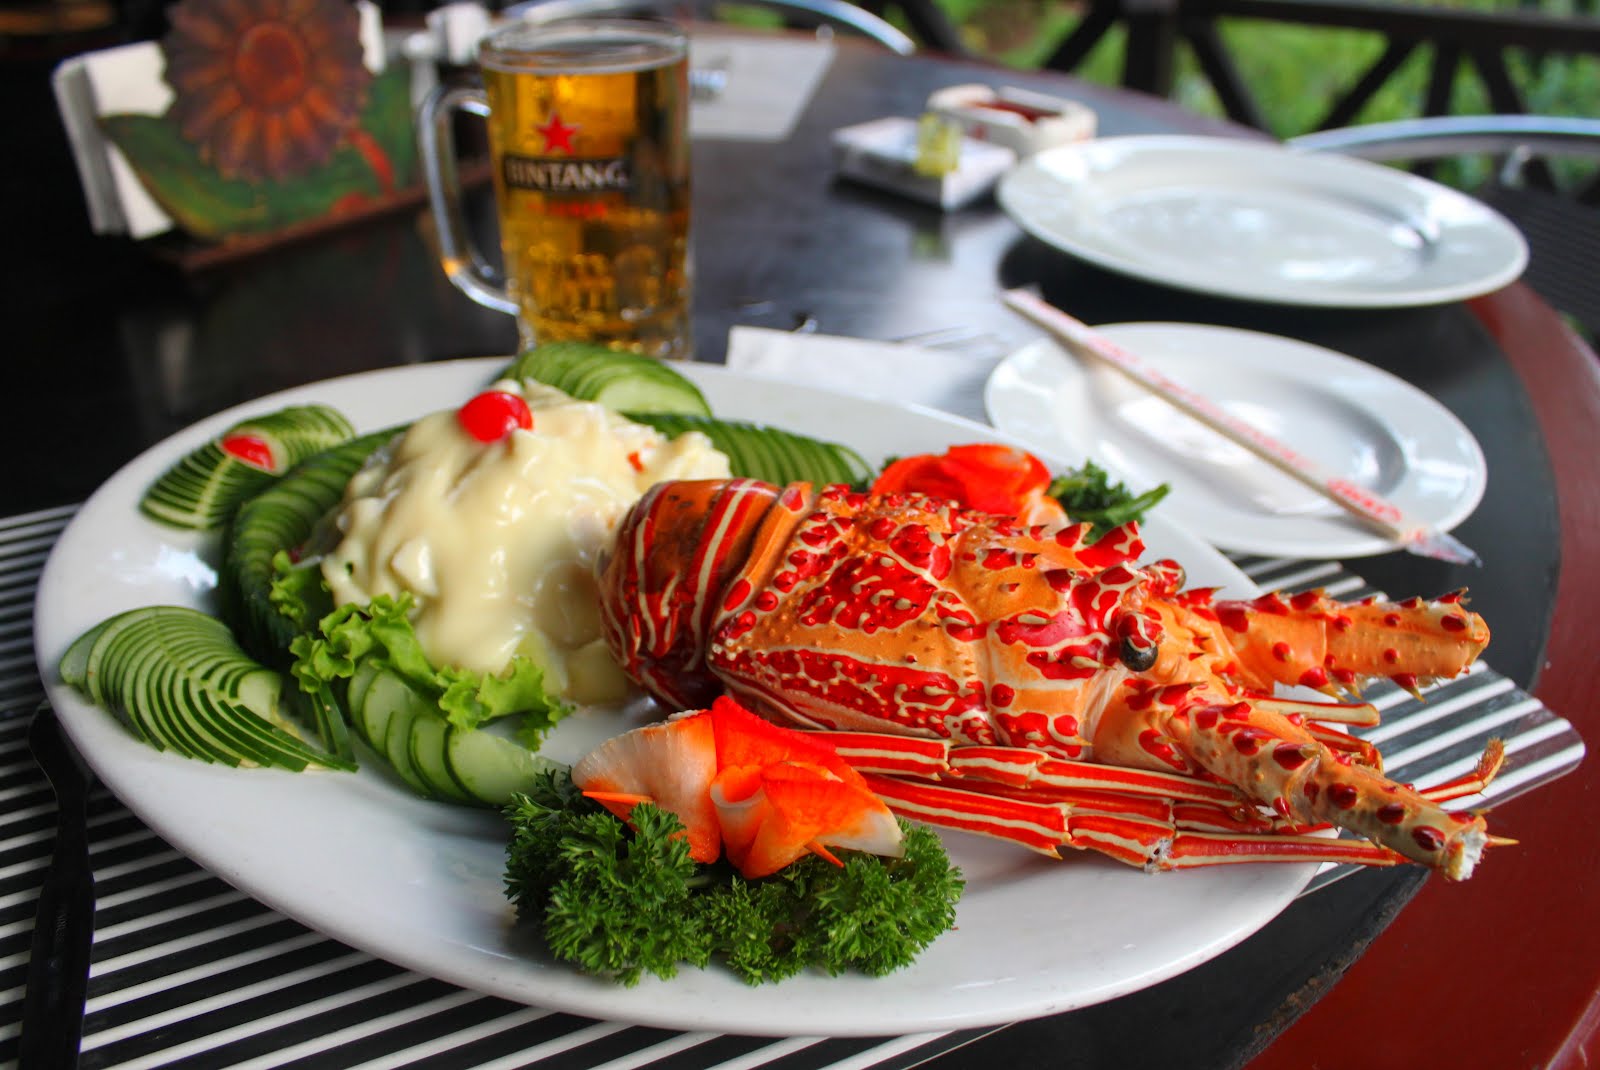 https://blogger.googleusercontent.com/img/b/R29vZ2xl/AVvXsEji71Hh5Q9WTh5K954zCm2JONh-maRu_muZc6QpphqVnFo29AM1TObIx66nUvCYydkypP4wXsjIrRxYsIgrr5YLeD20QQQfm2CO2ZFuzBrmSovaYGnWOf4VrorUNY6NTkWjm8HUTHIudA/s1600/Lobster+Lunch+in+Jakarta+Indonesia.jpg